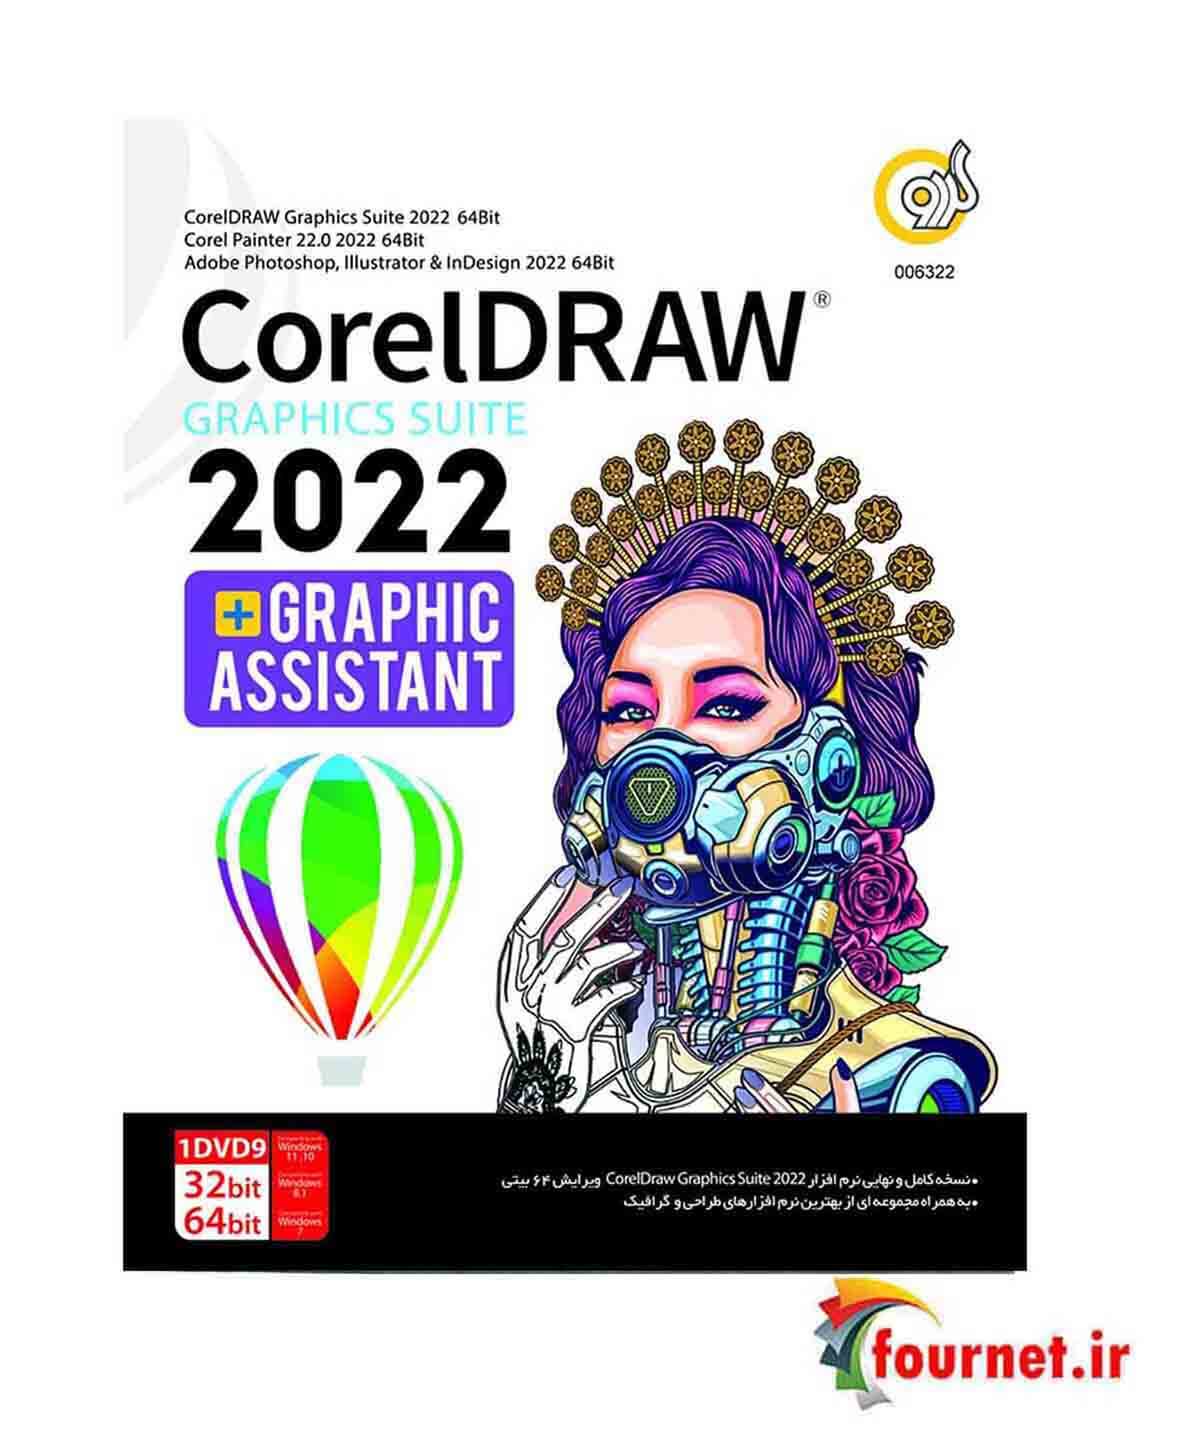 coreldraw 2022